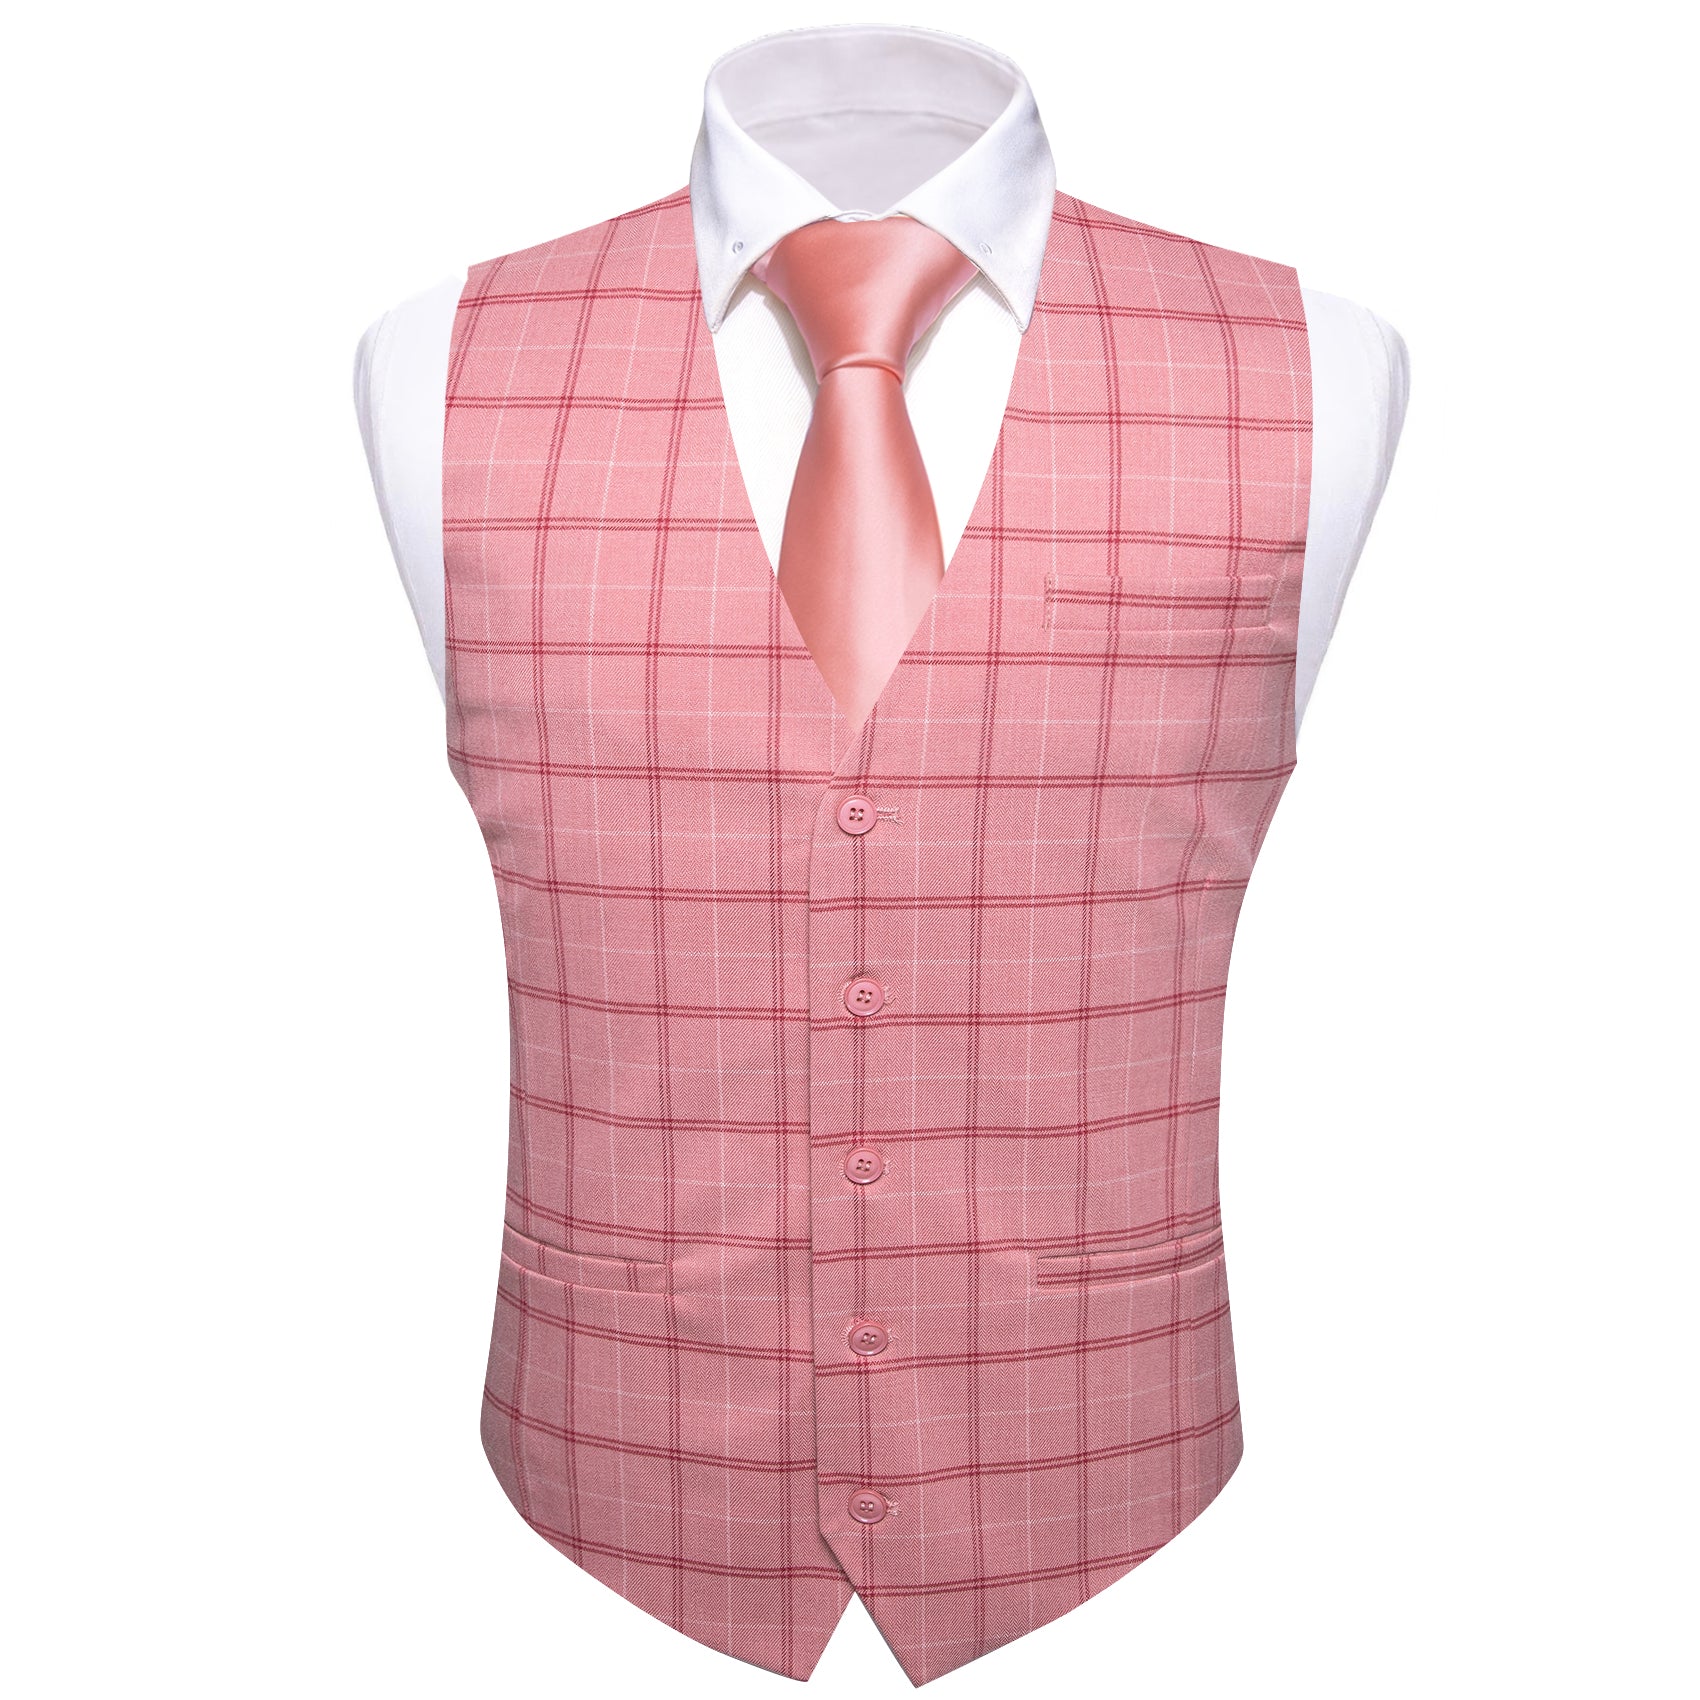 Barry.wang Luxury Pink Plaid Waistcoat Vest